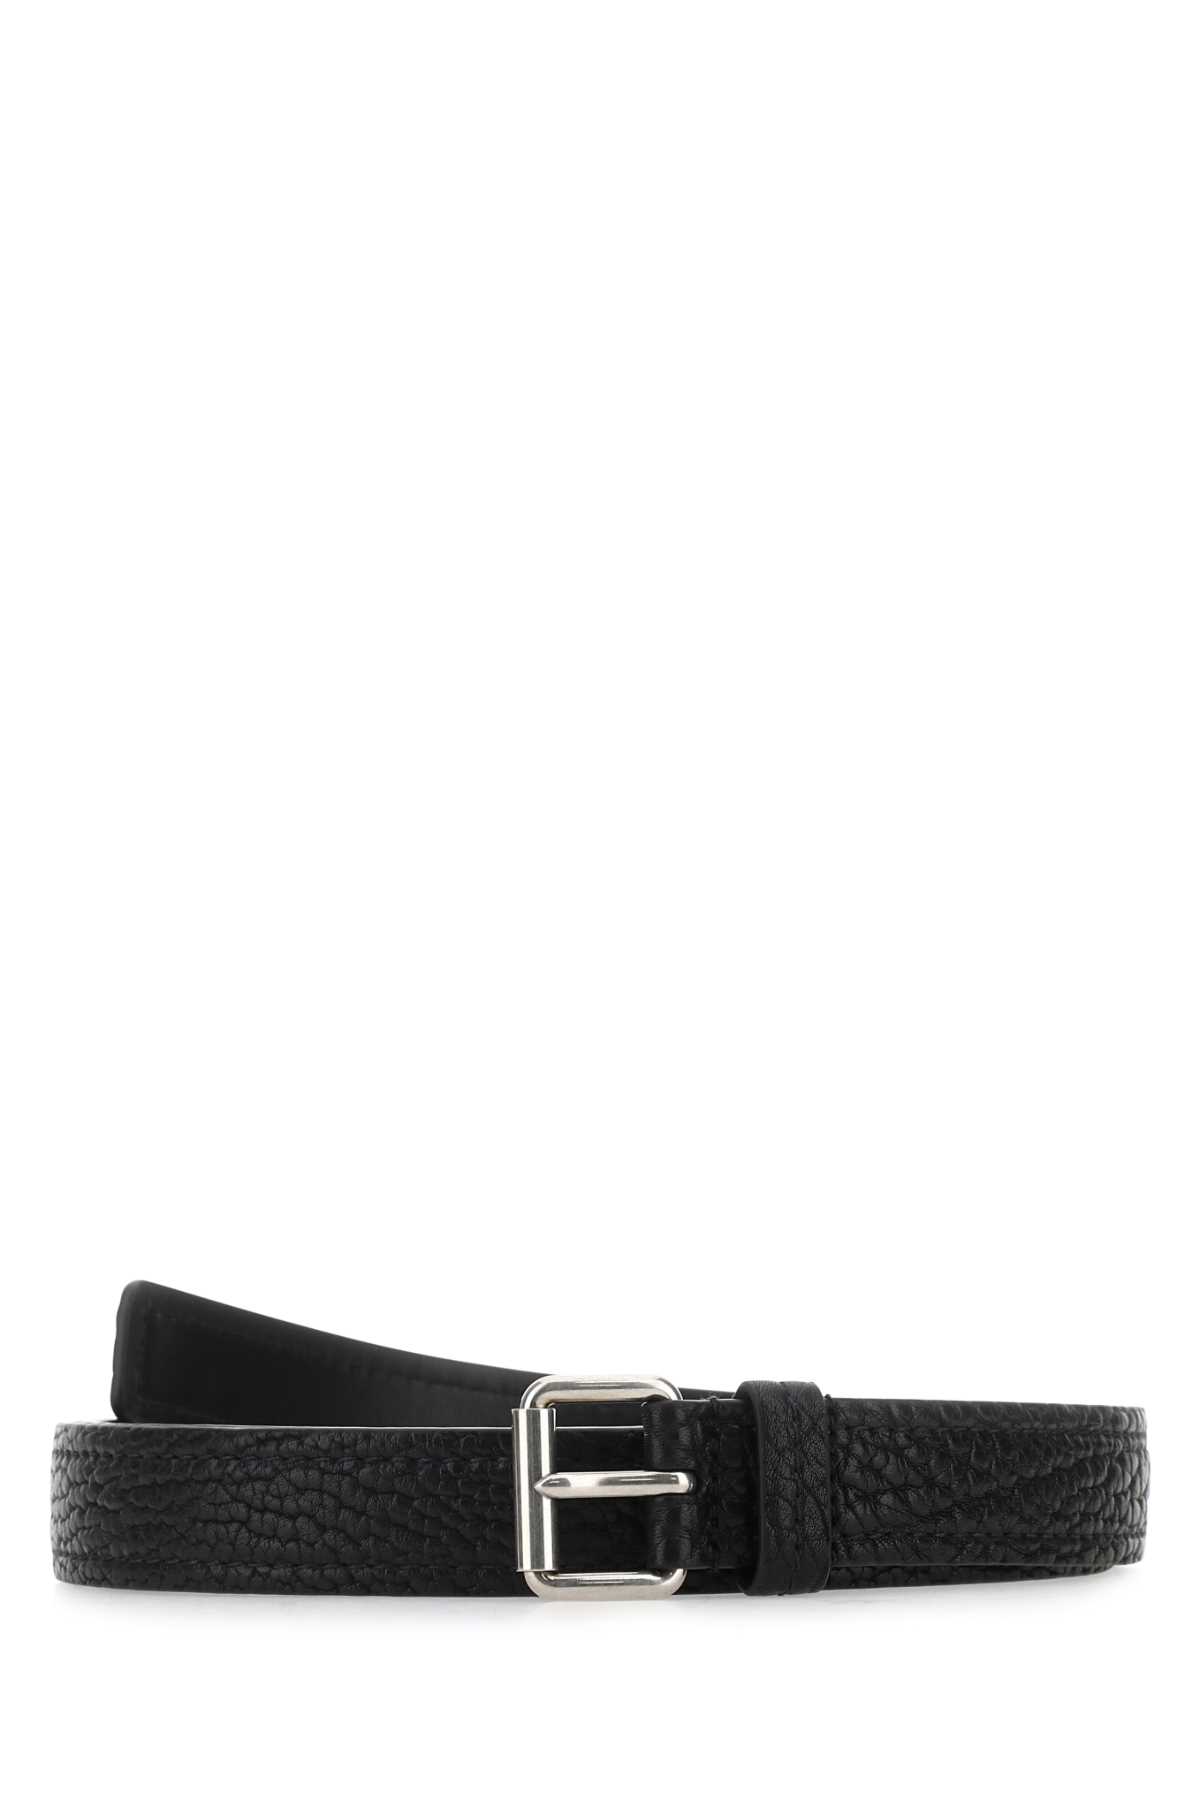 Shop Prada Black Leather Belt In F0002